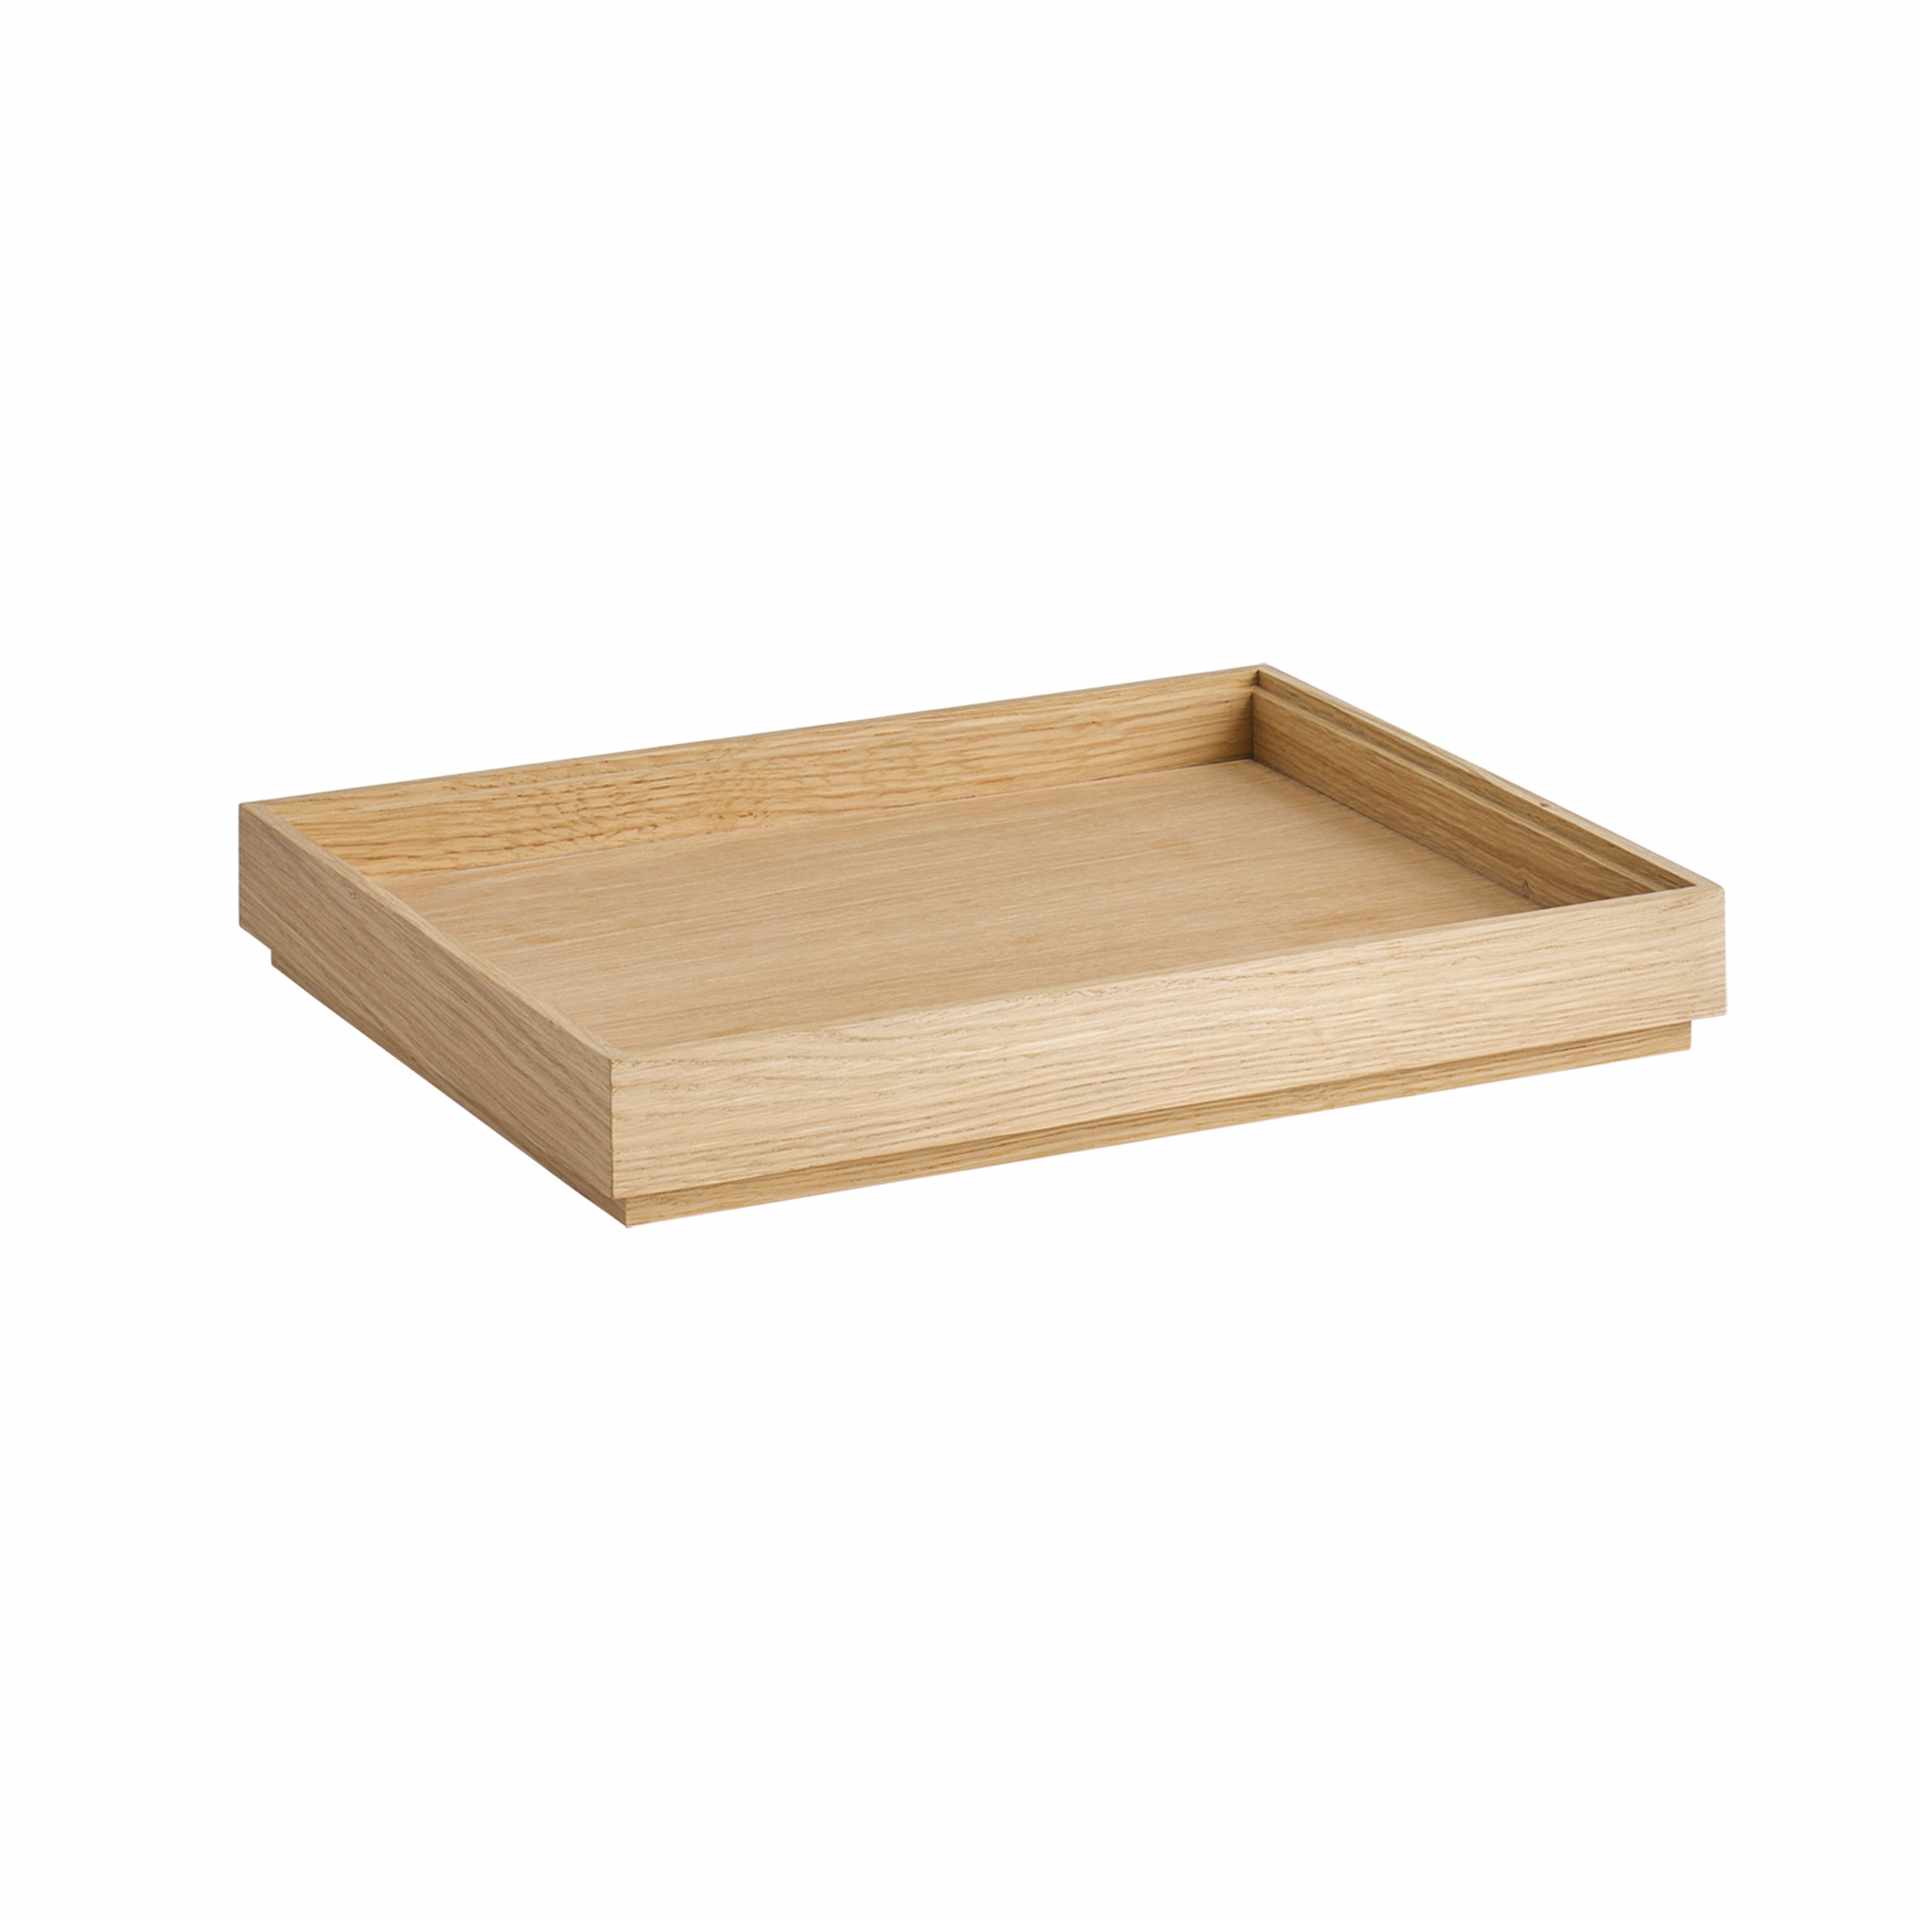 GN-Holzbox - Serie Valo - braun - Höhe 4,5 cm - GN 1/2 (325 x 265 mm) - Eichenholz - 14003-B